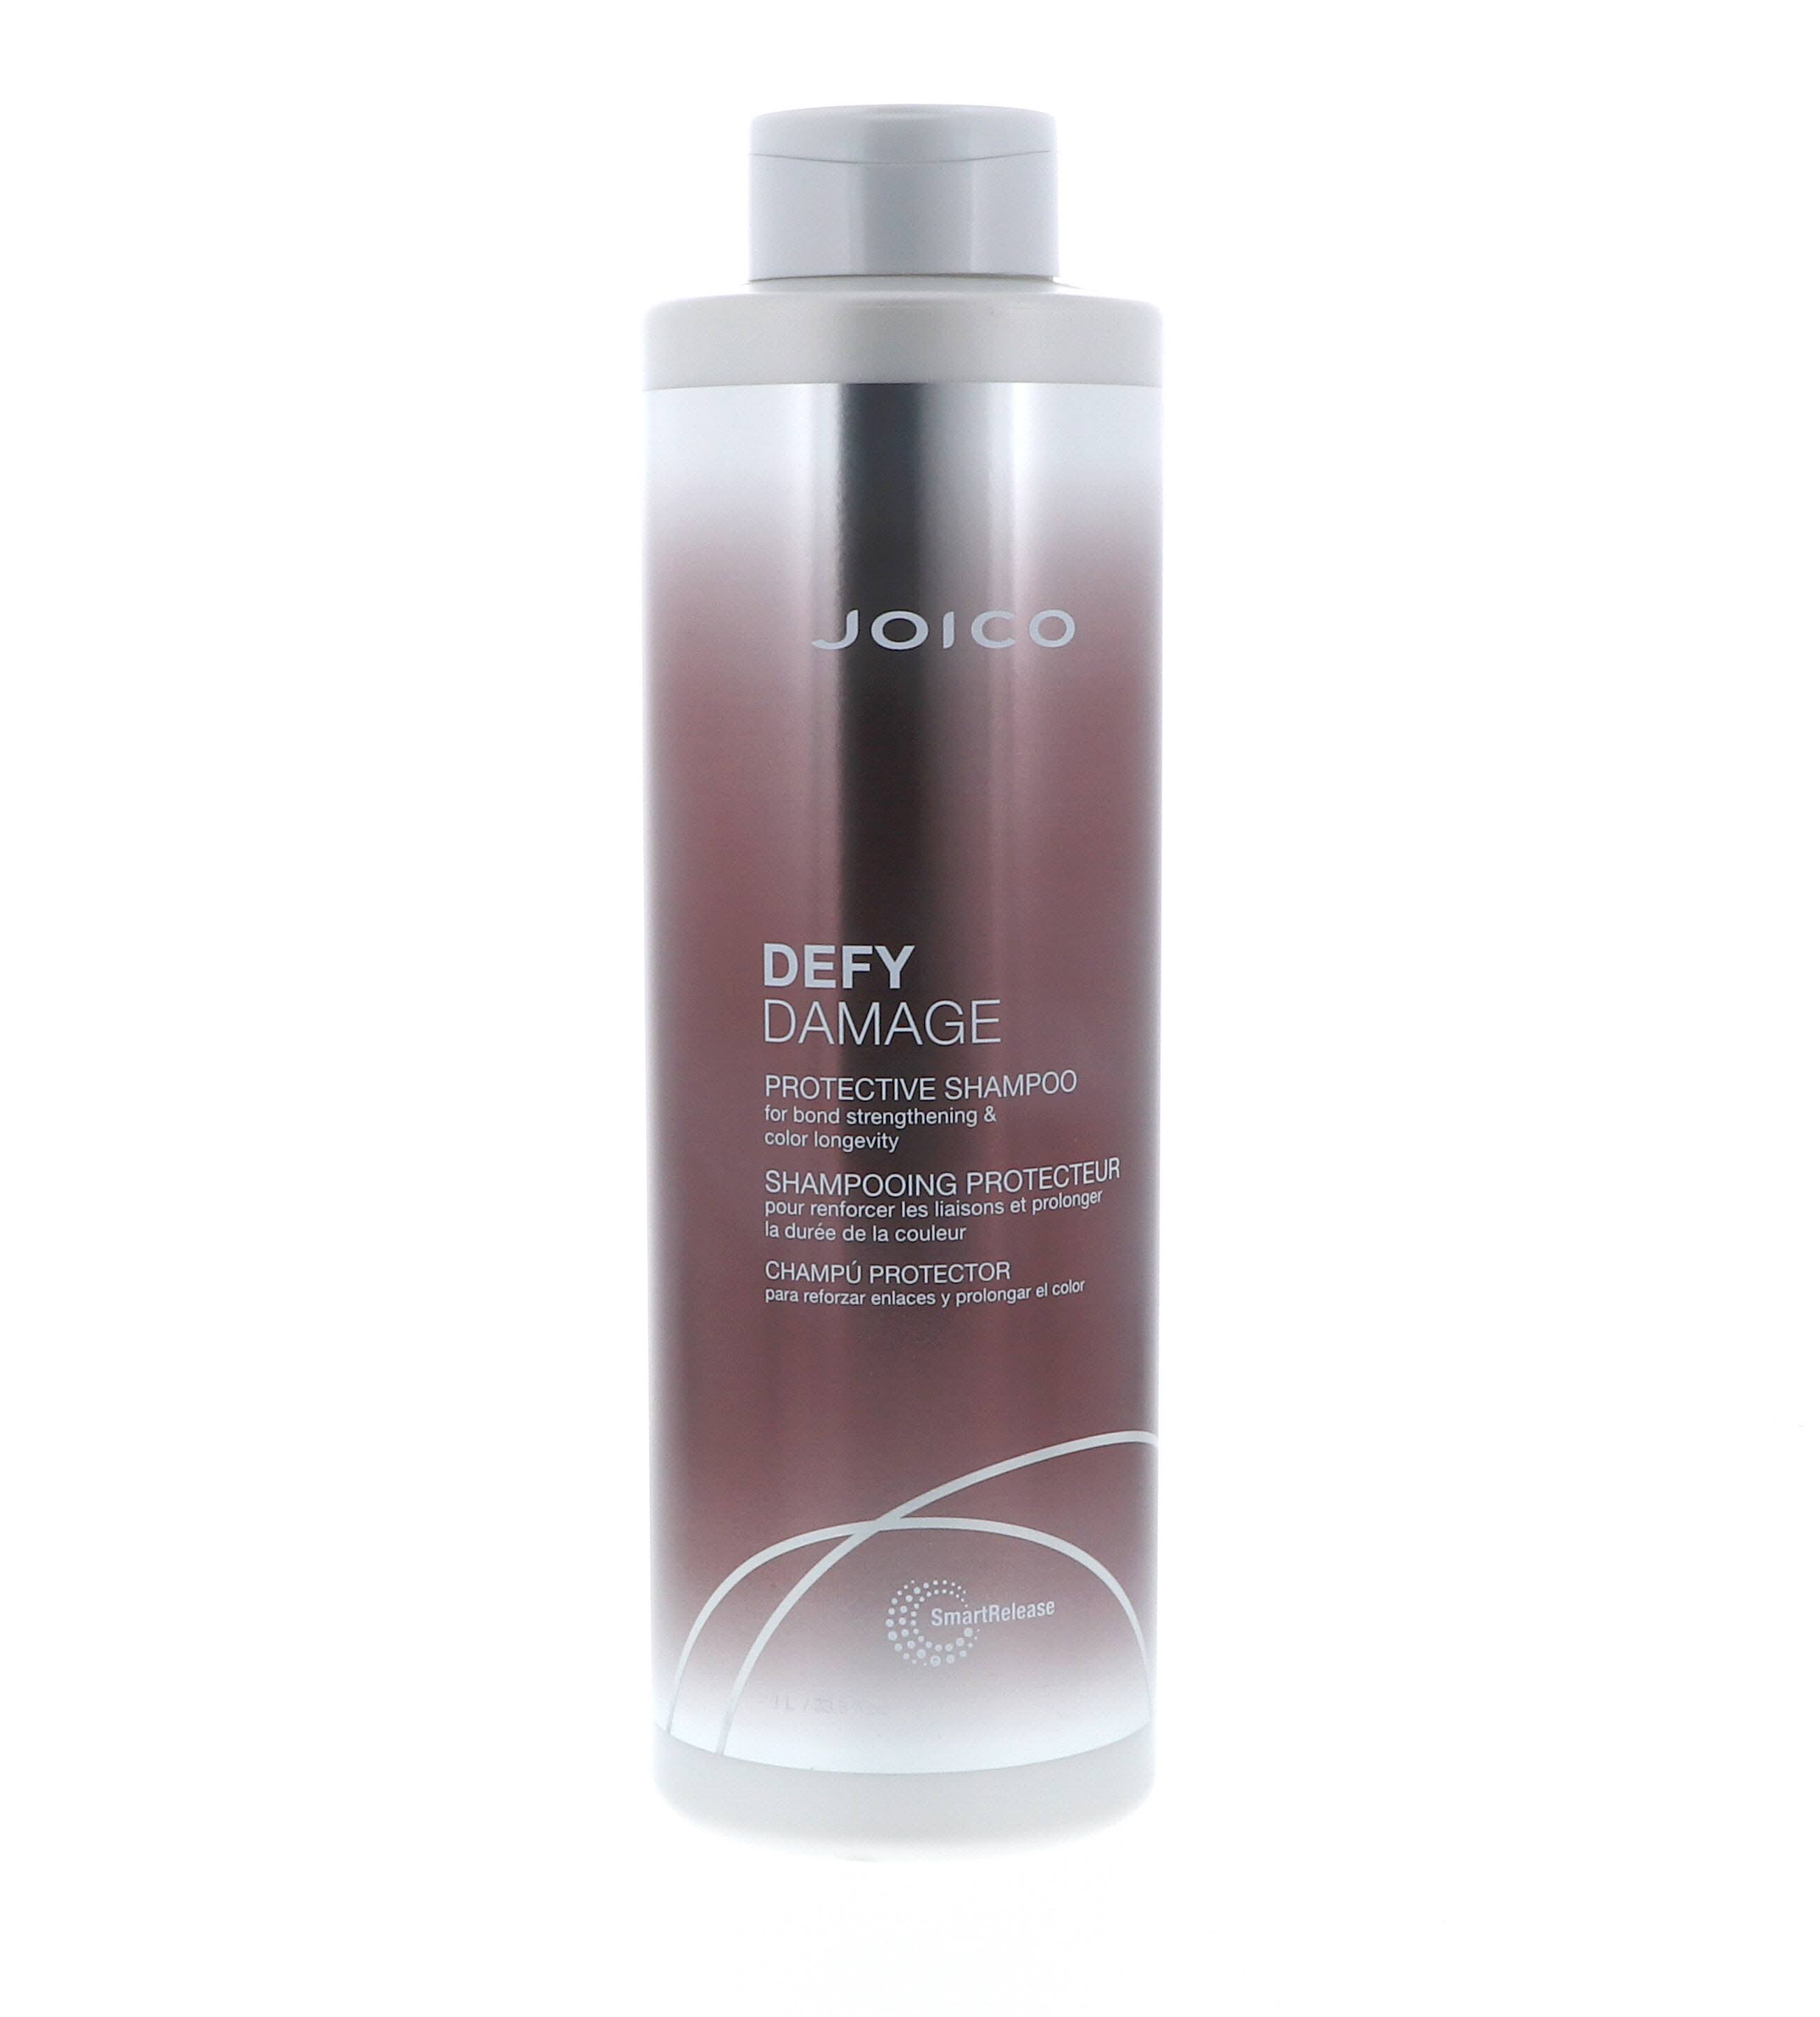 Joico Defy Damage Protective Shampoo - 33.8 oz